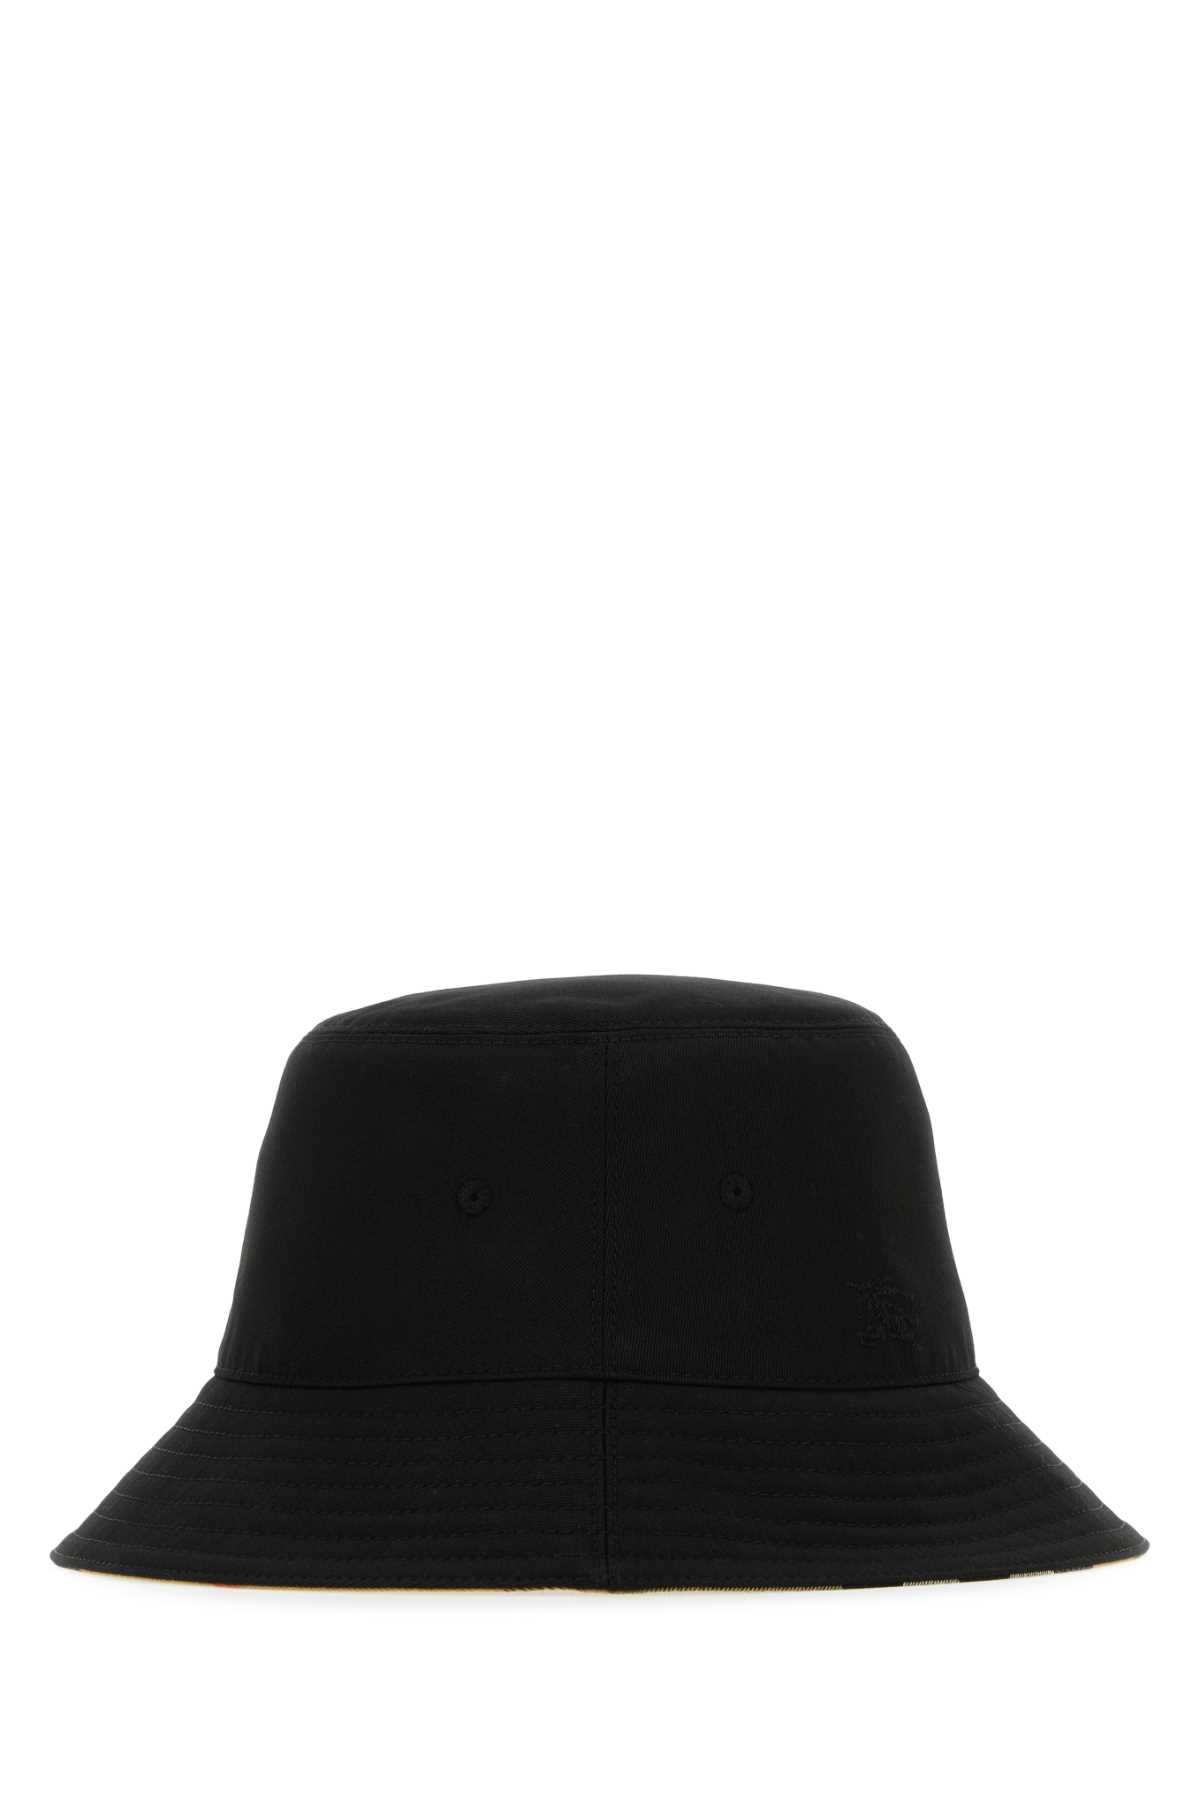 Burberry Black Polyester Blend Bucket Hat